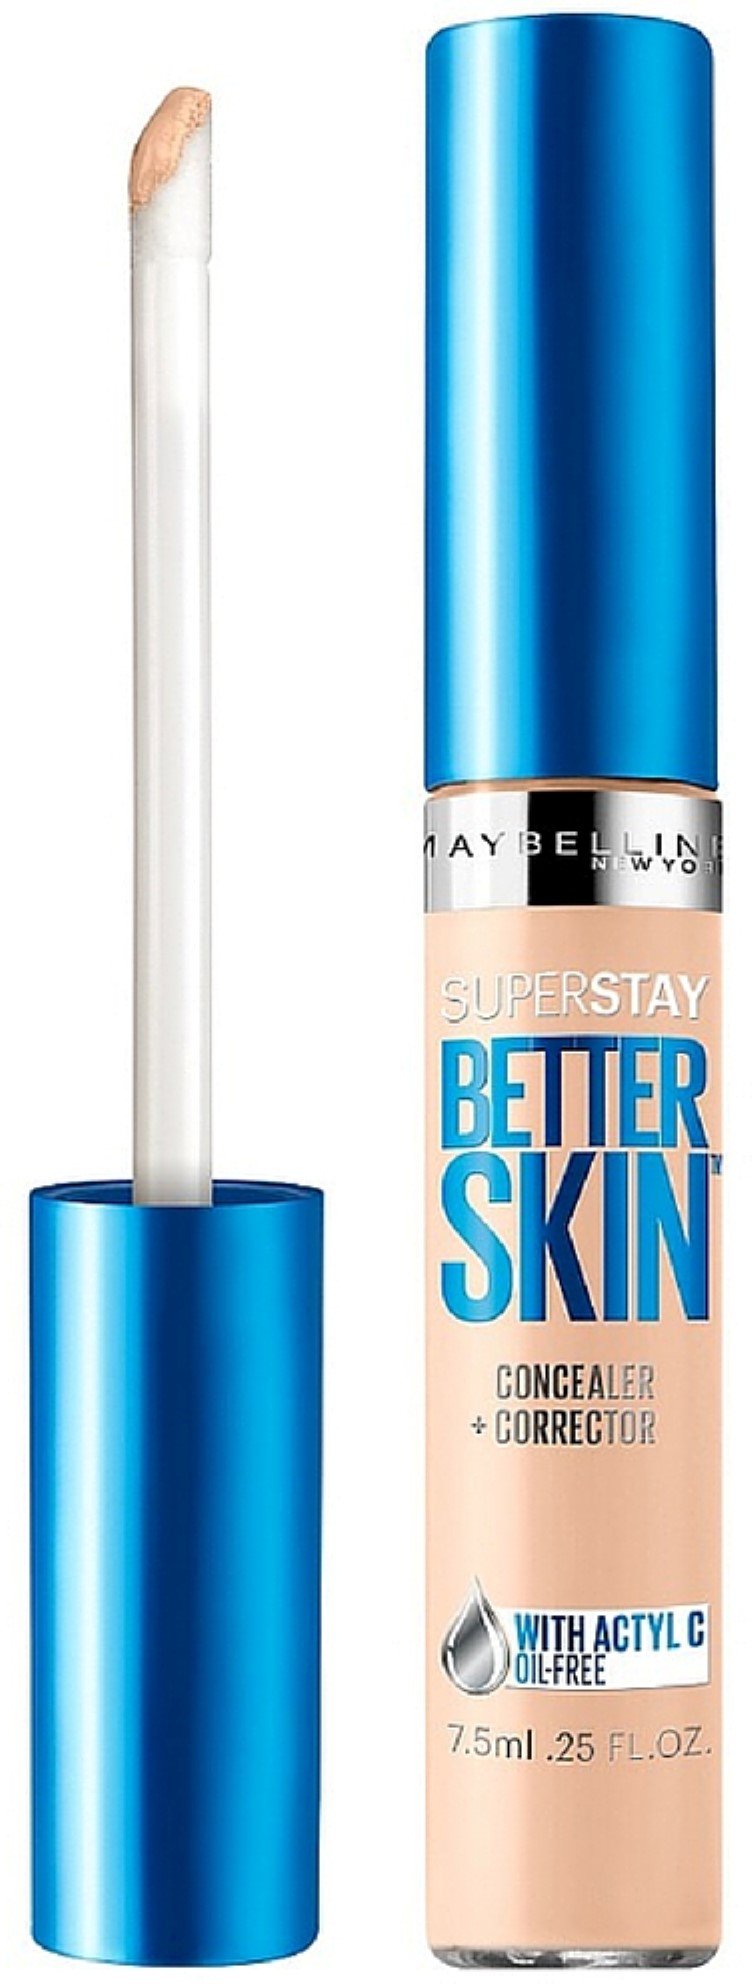 Maybelline New York Superstay Better Skin Concealer + Corrector, Light 0.25 Ounce